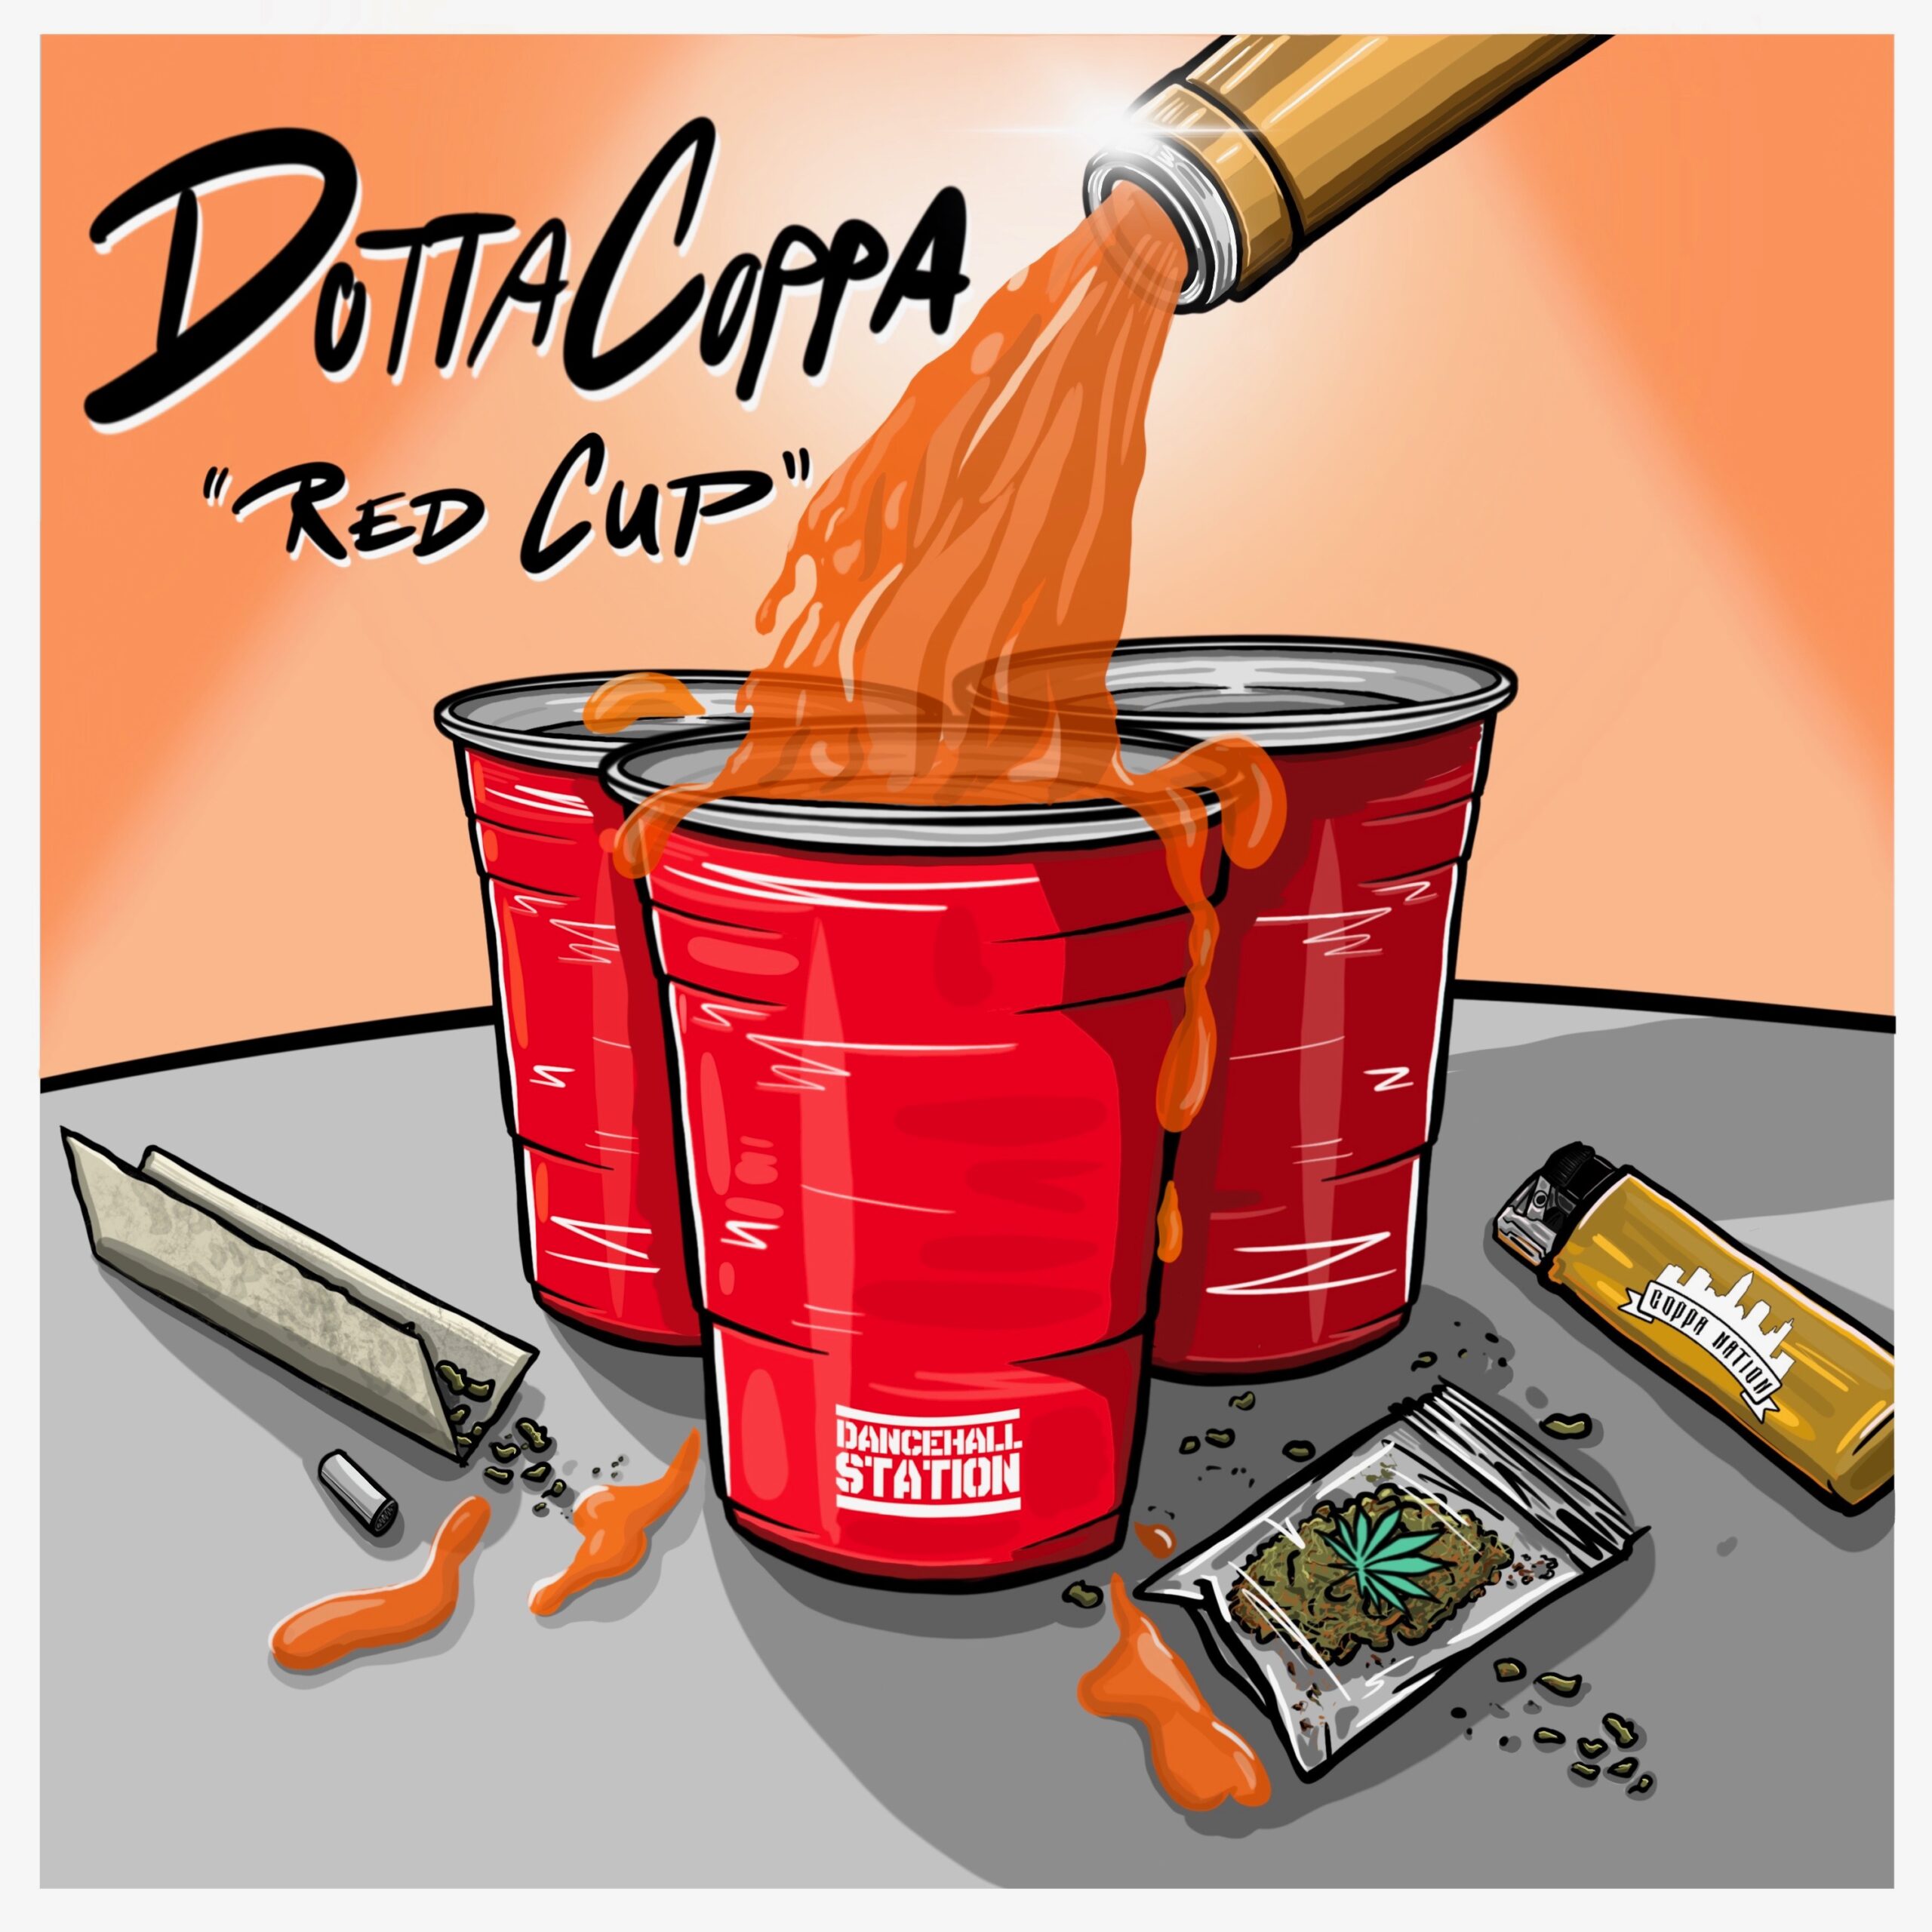 DOTTA COPPA – RED CUP